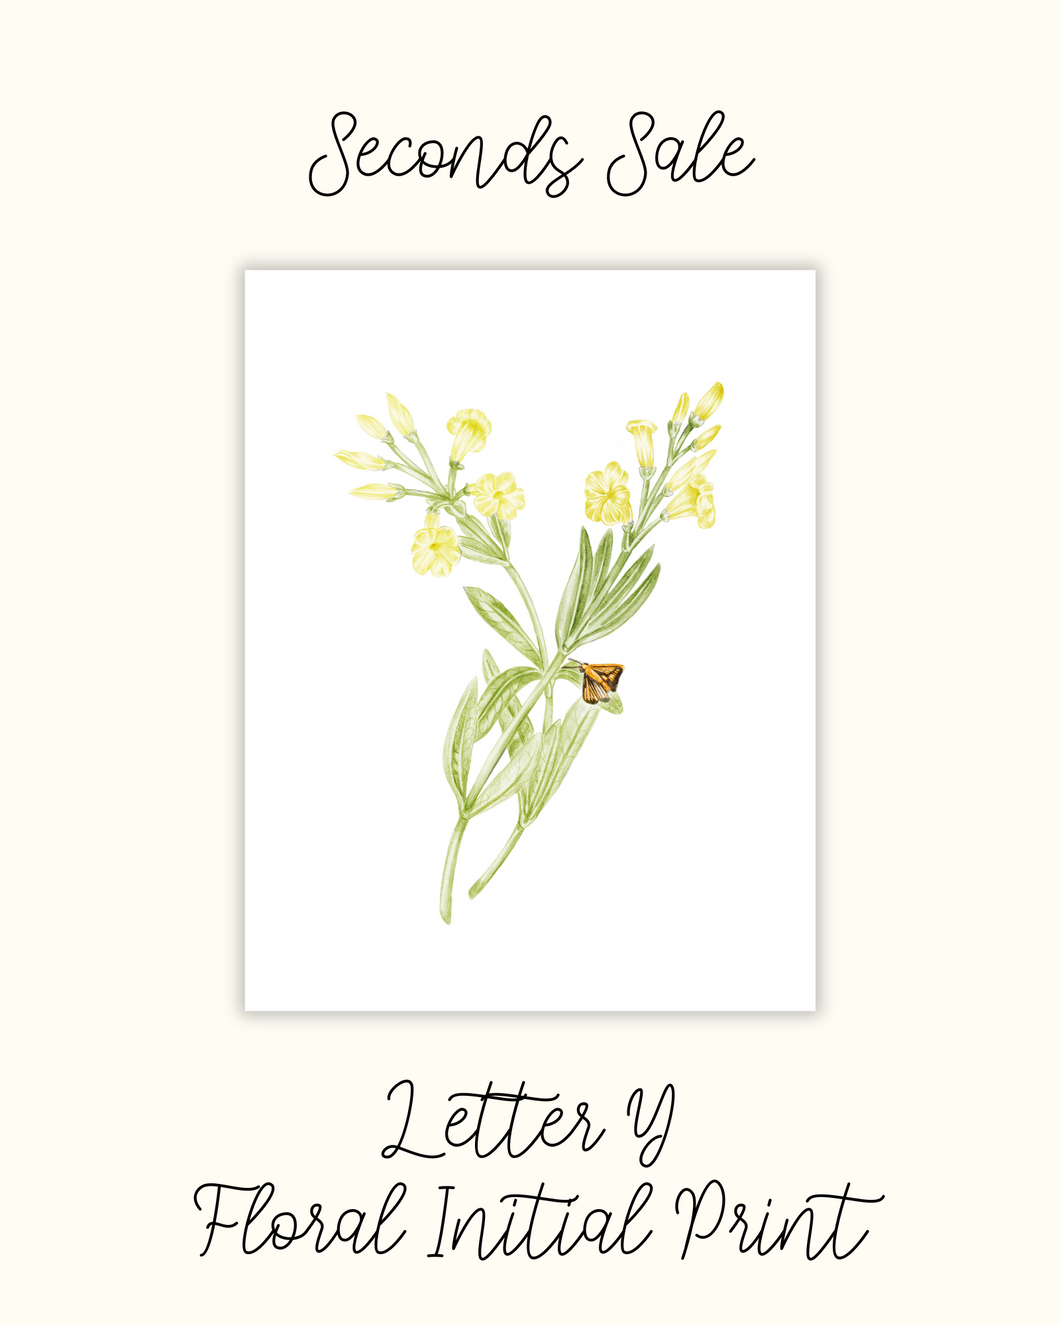 Letter Y Floral Initial Print - Seconds Sale